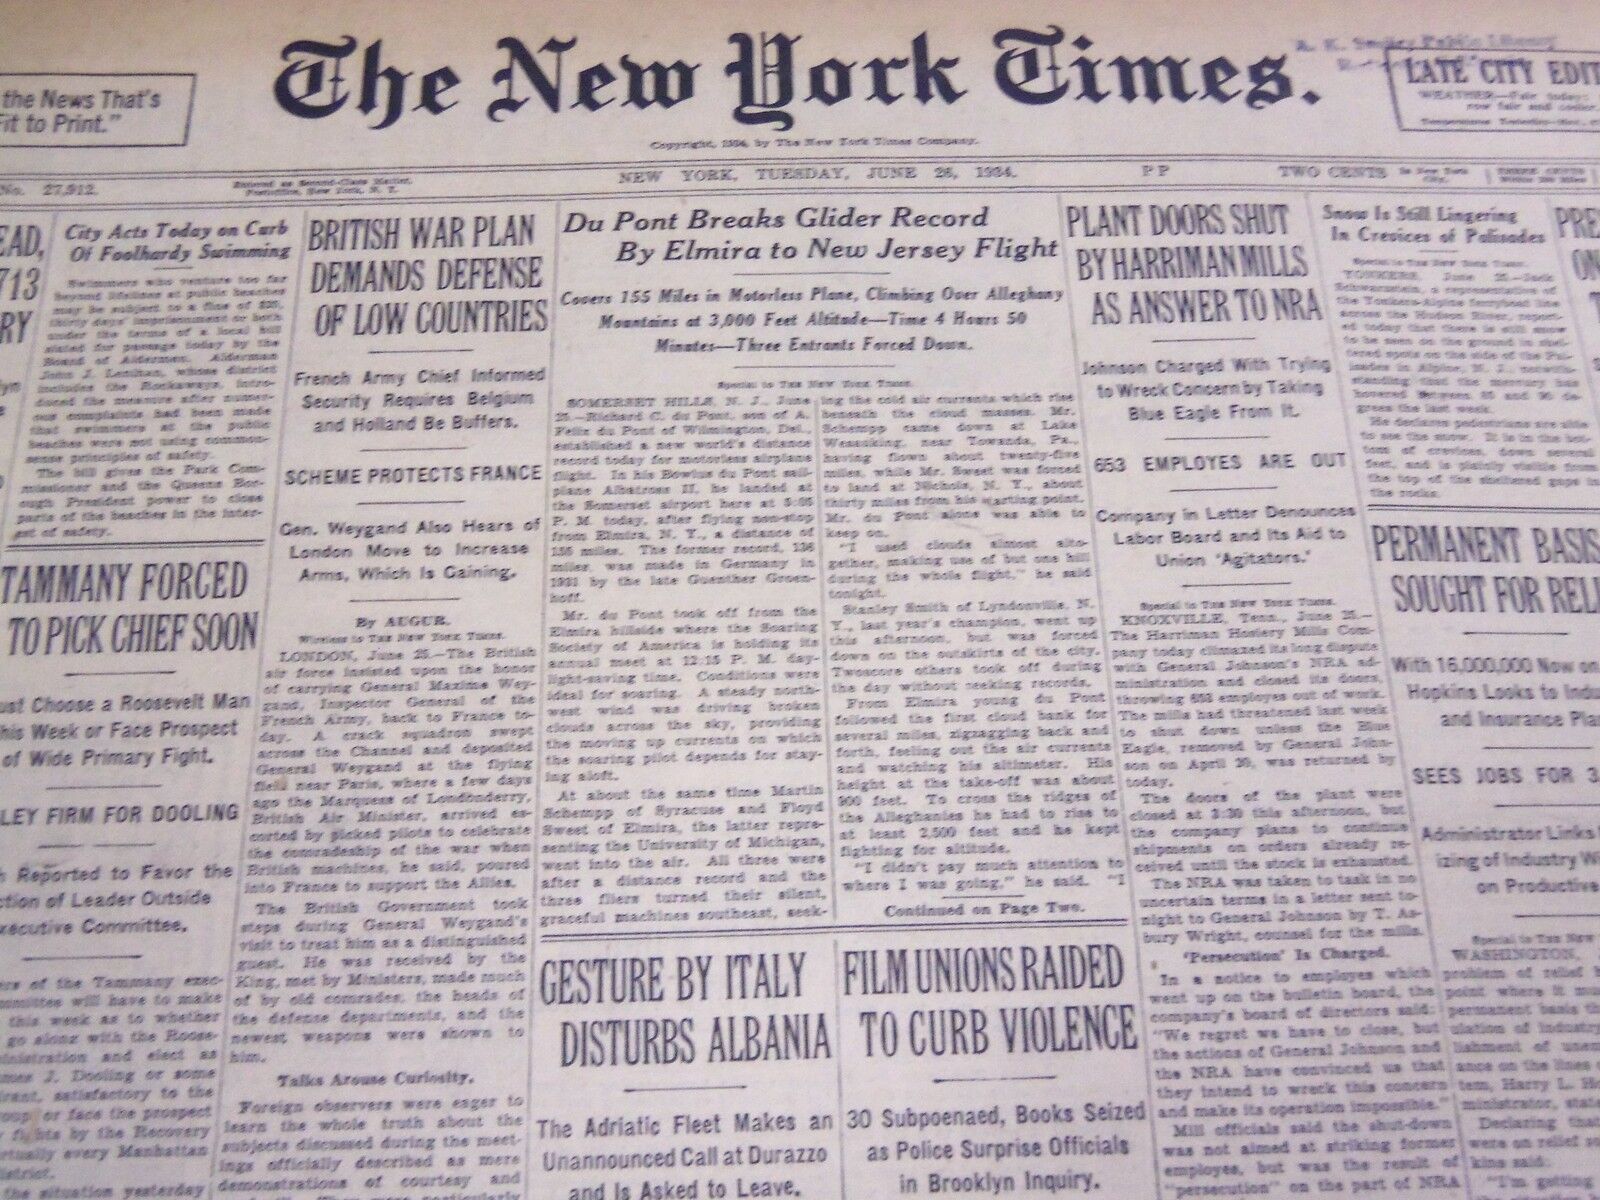 1934 JUNE 26 NEW YORK TIMES - DU PONT BREAKS GLIDER RECORD - NT 4210